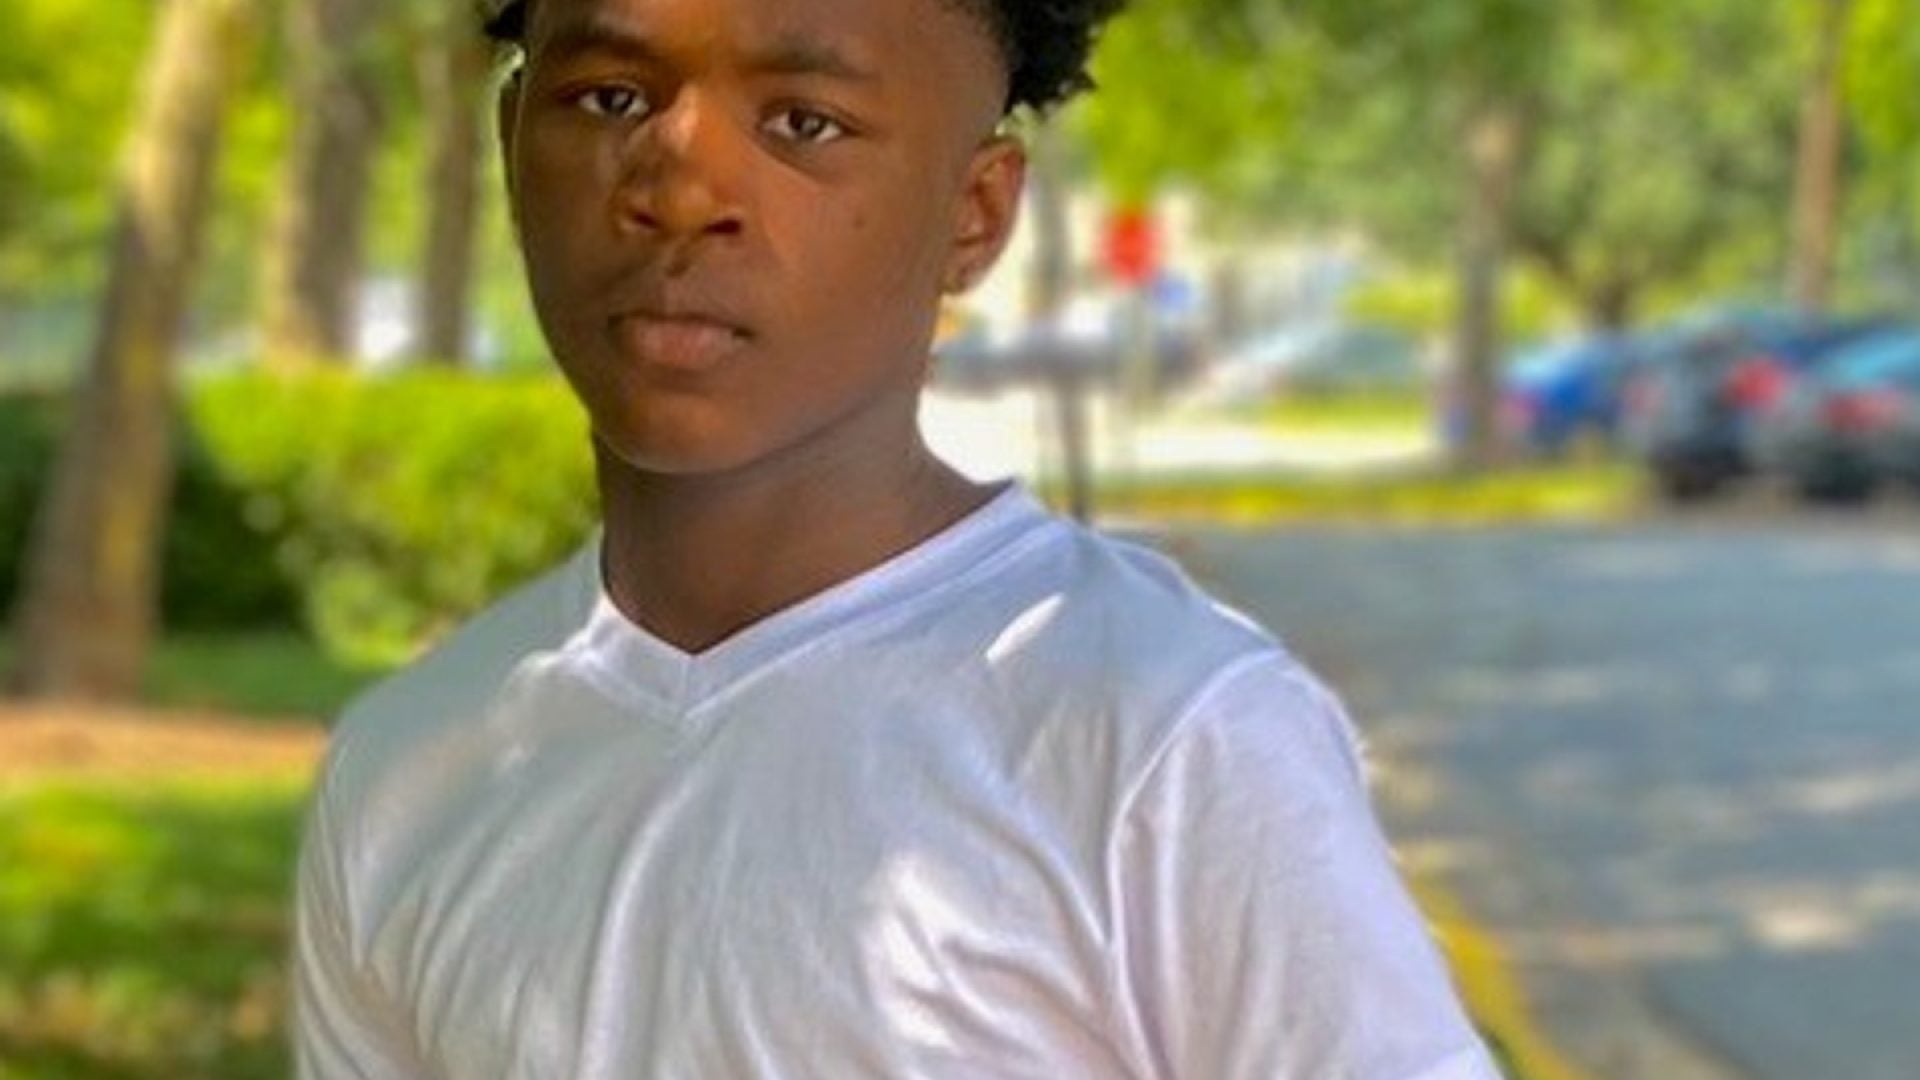 Shooting Of 13-Year-Old Karon Blake Sparks Outrage In Washington D.C. Community